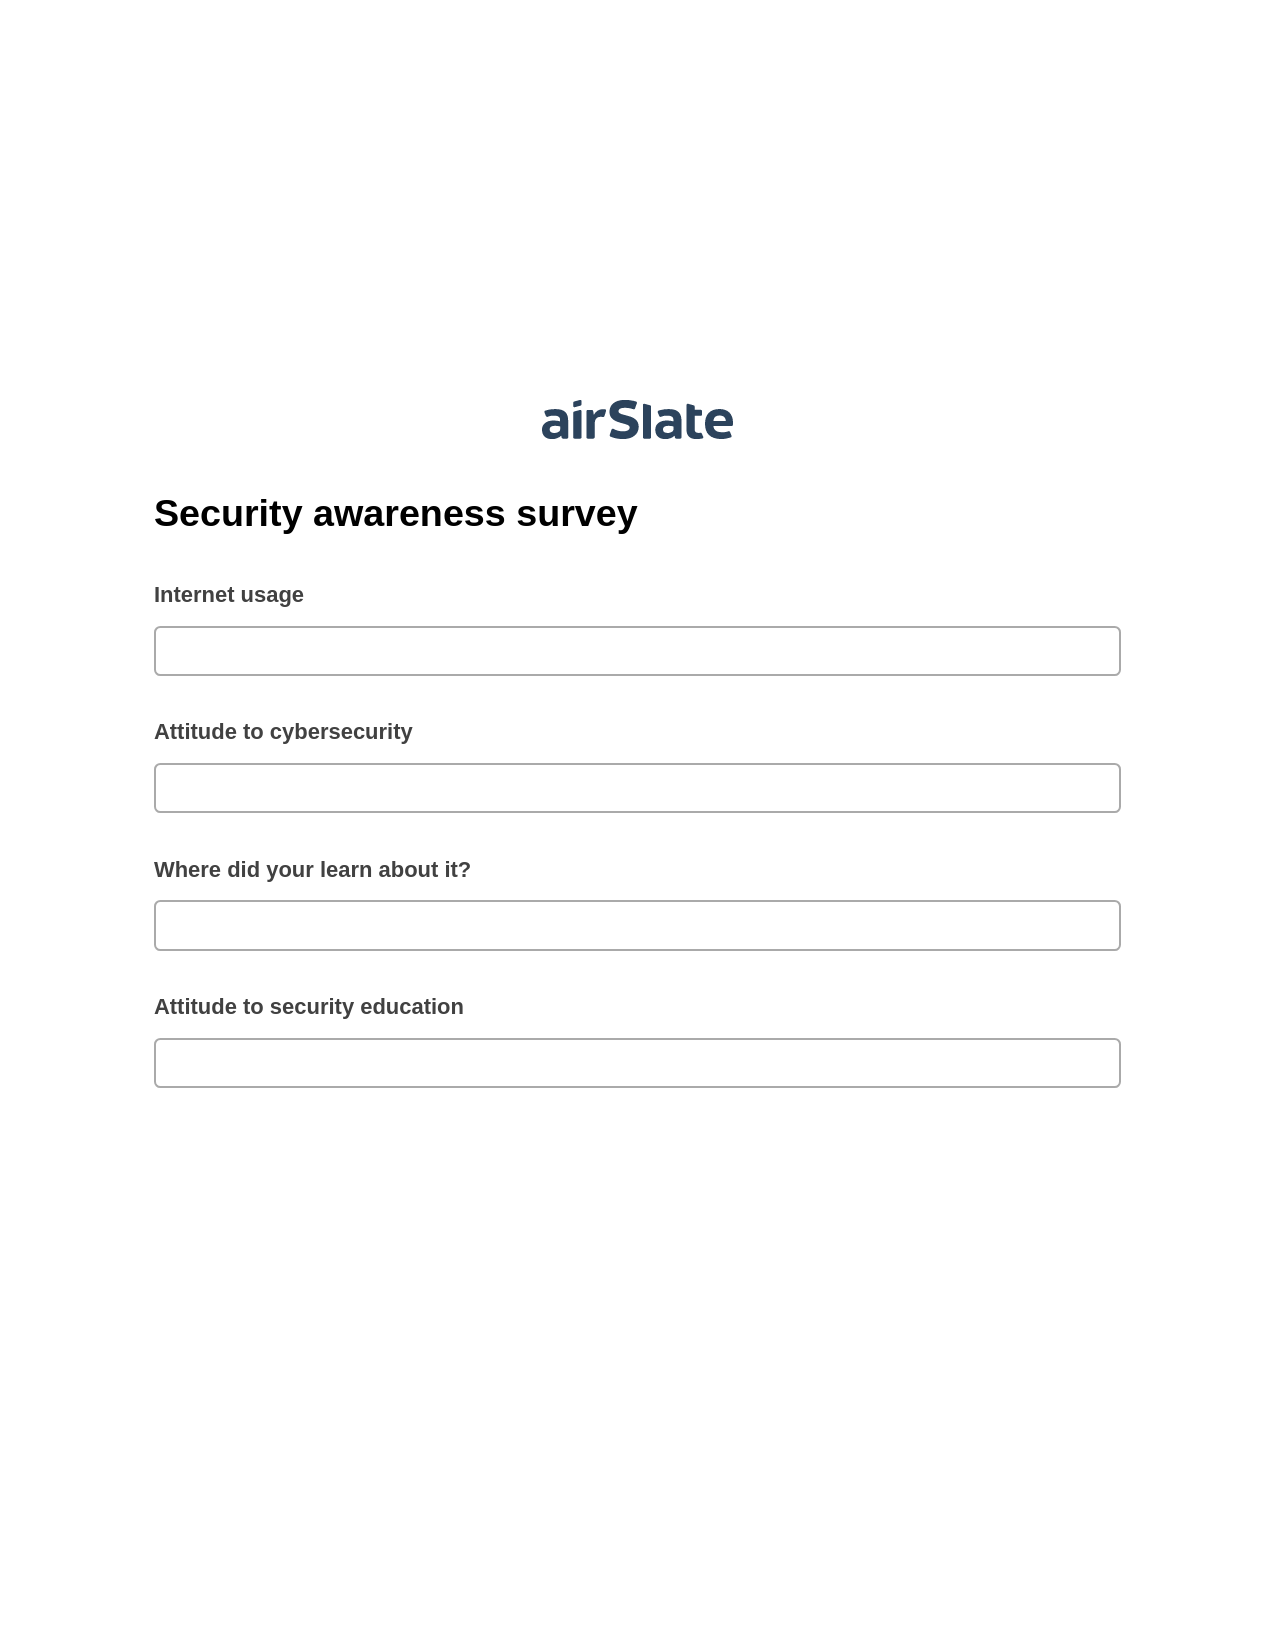 Security awareness survey Pre-fill from Google Sheets Bot, Slack Notification Bot, Export to Google Sheet Bot